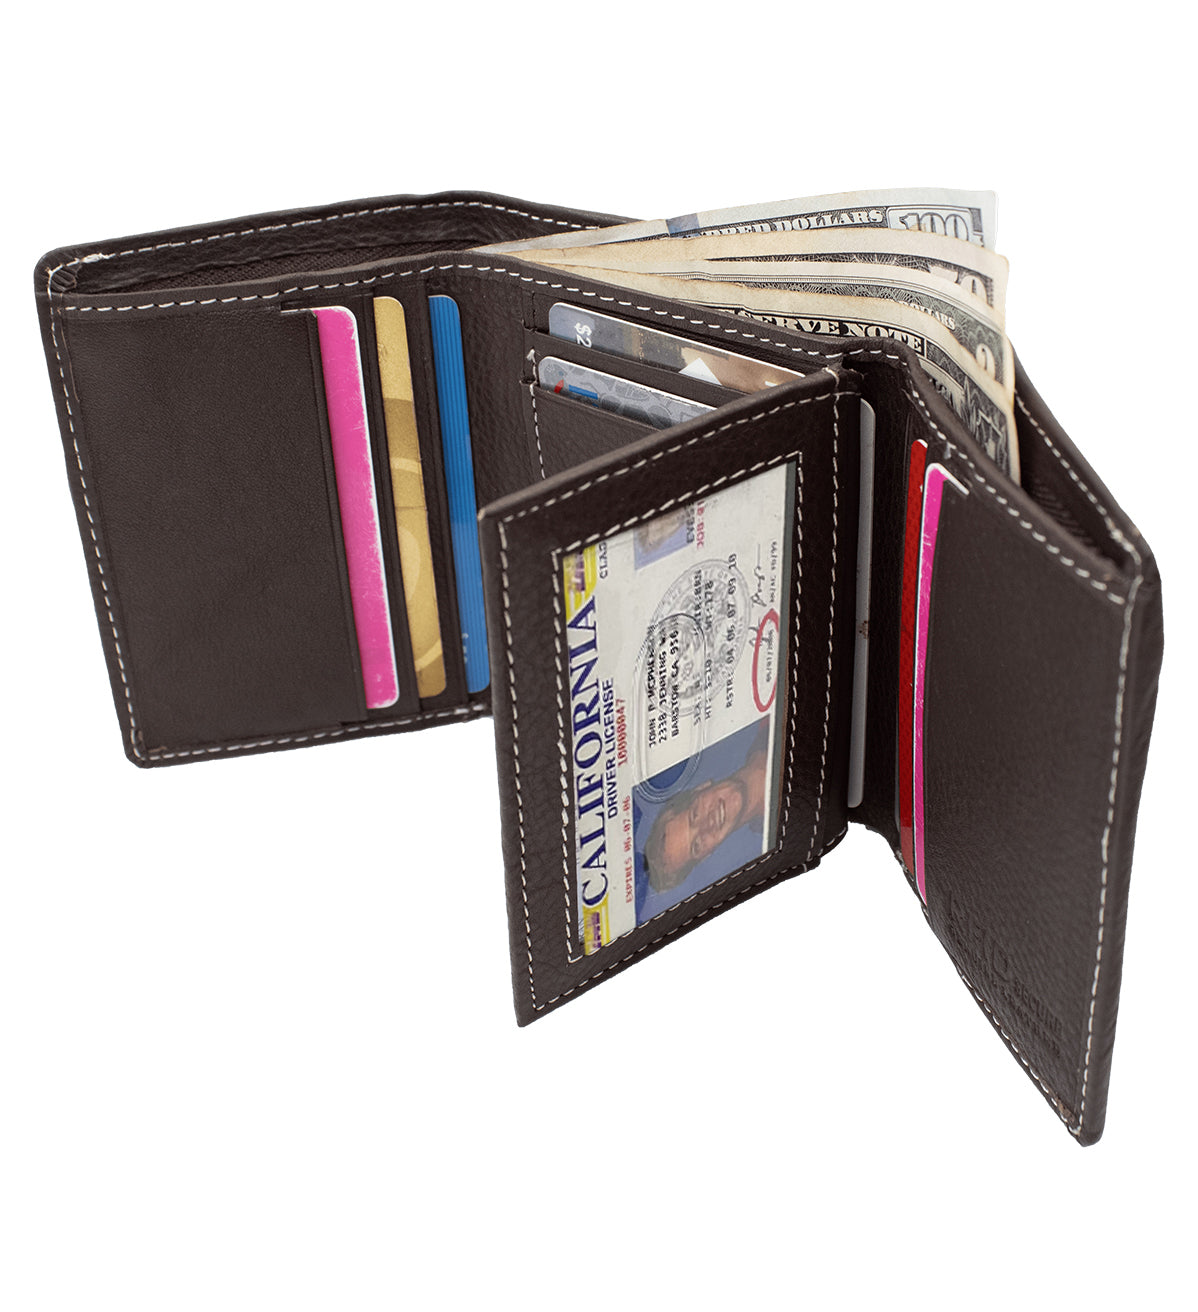 RFID Blocking Genuine Leather Men's Trifold Wallet Center Flap Premium Cowhide